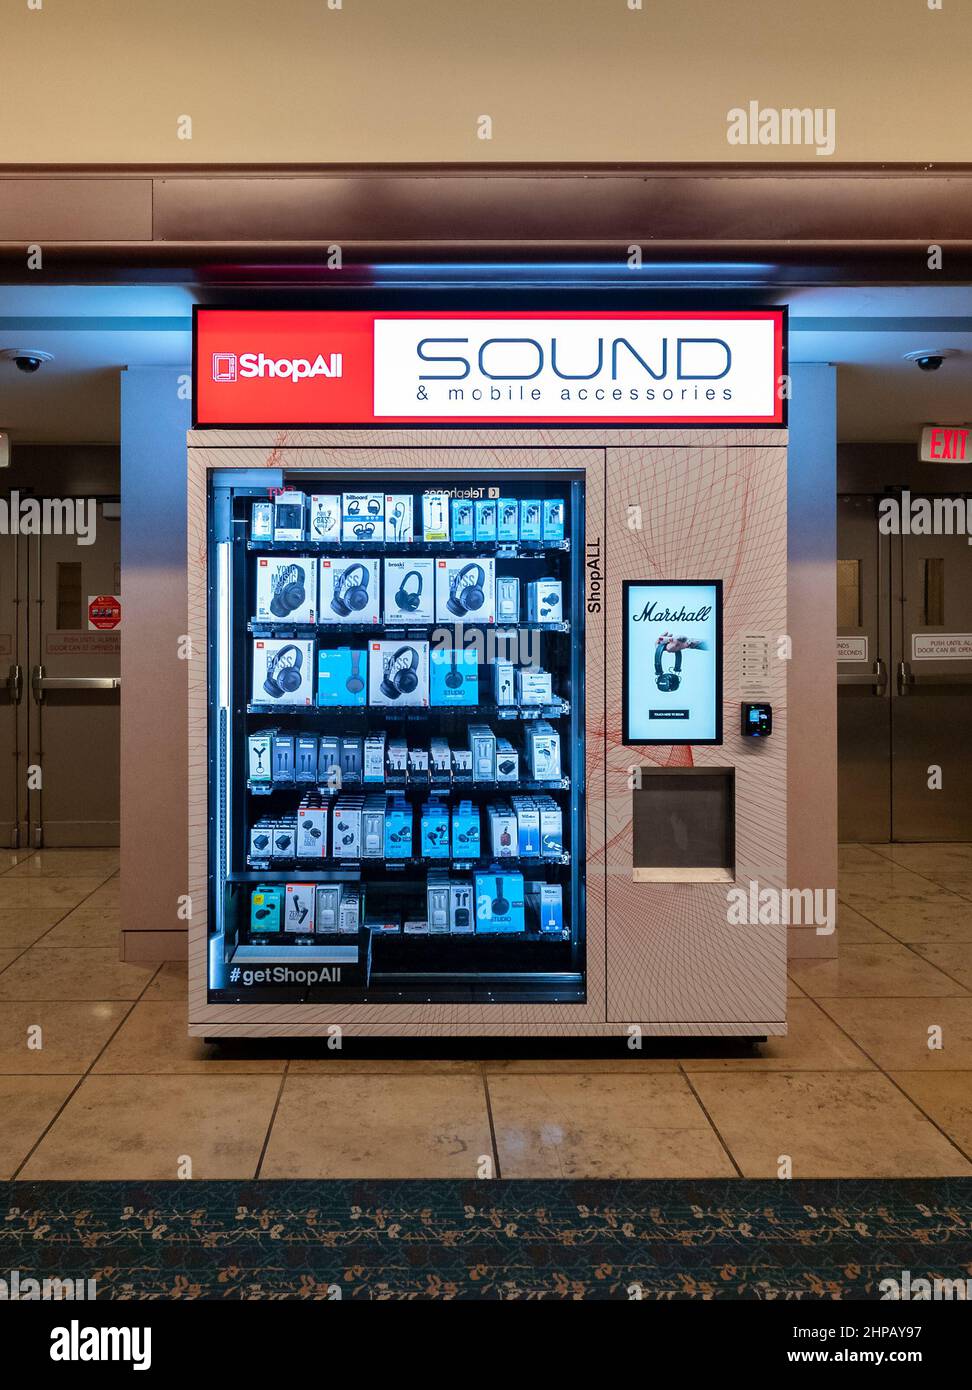 Orlando, Florida - February 9, 2022: Full View of ShopAll Express Vending Machine inside Orlando International Airport (MCO) that Sells a Range of Sou Stock Photo